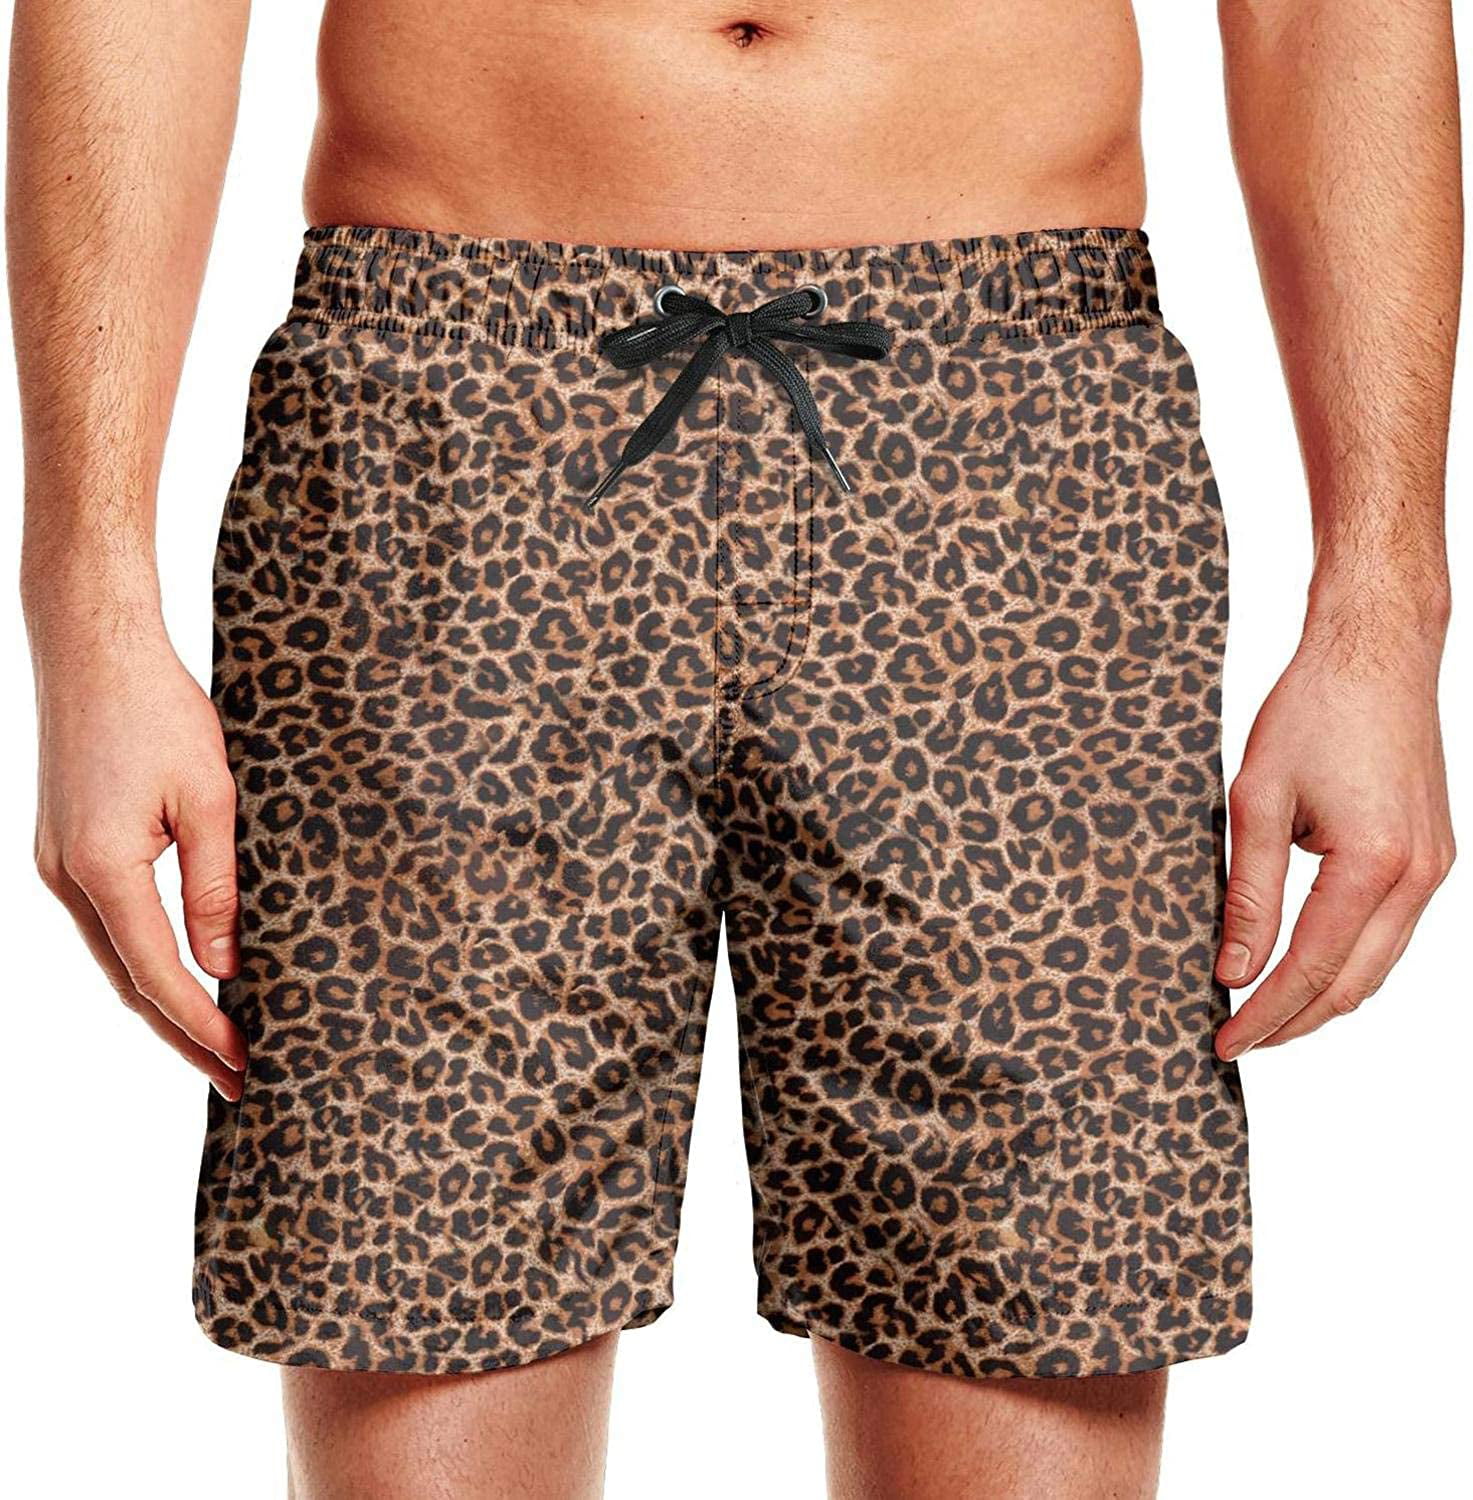 Printed Swim Shorts - Brown/leopard print - Men